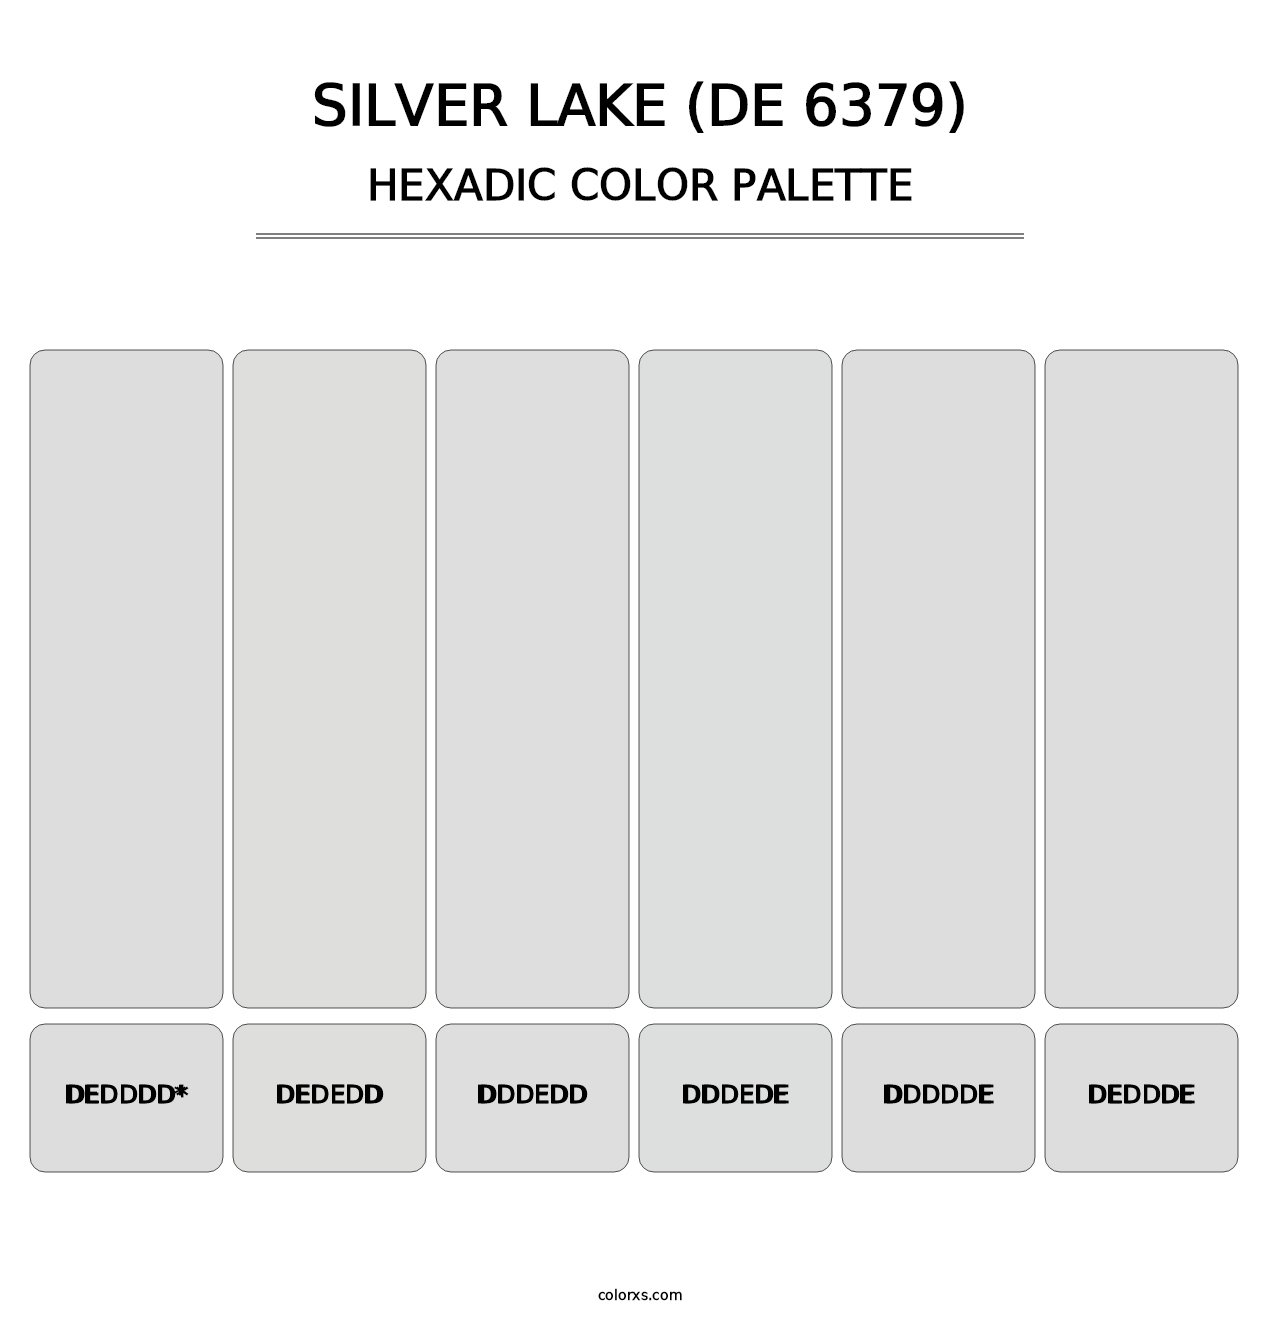 Silver Lake (DE 6379) - Hexadic Color Palette